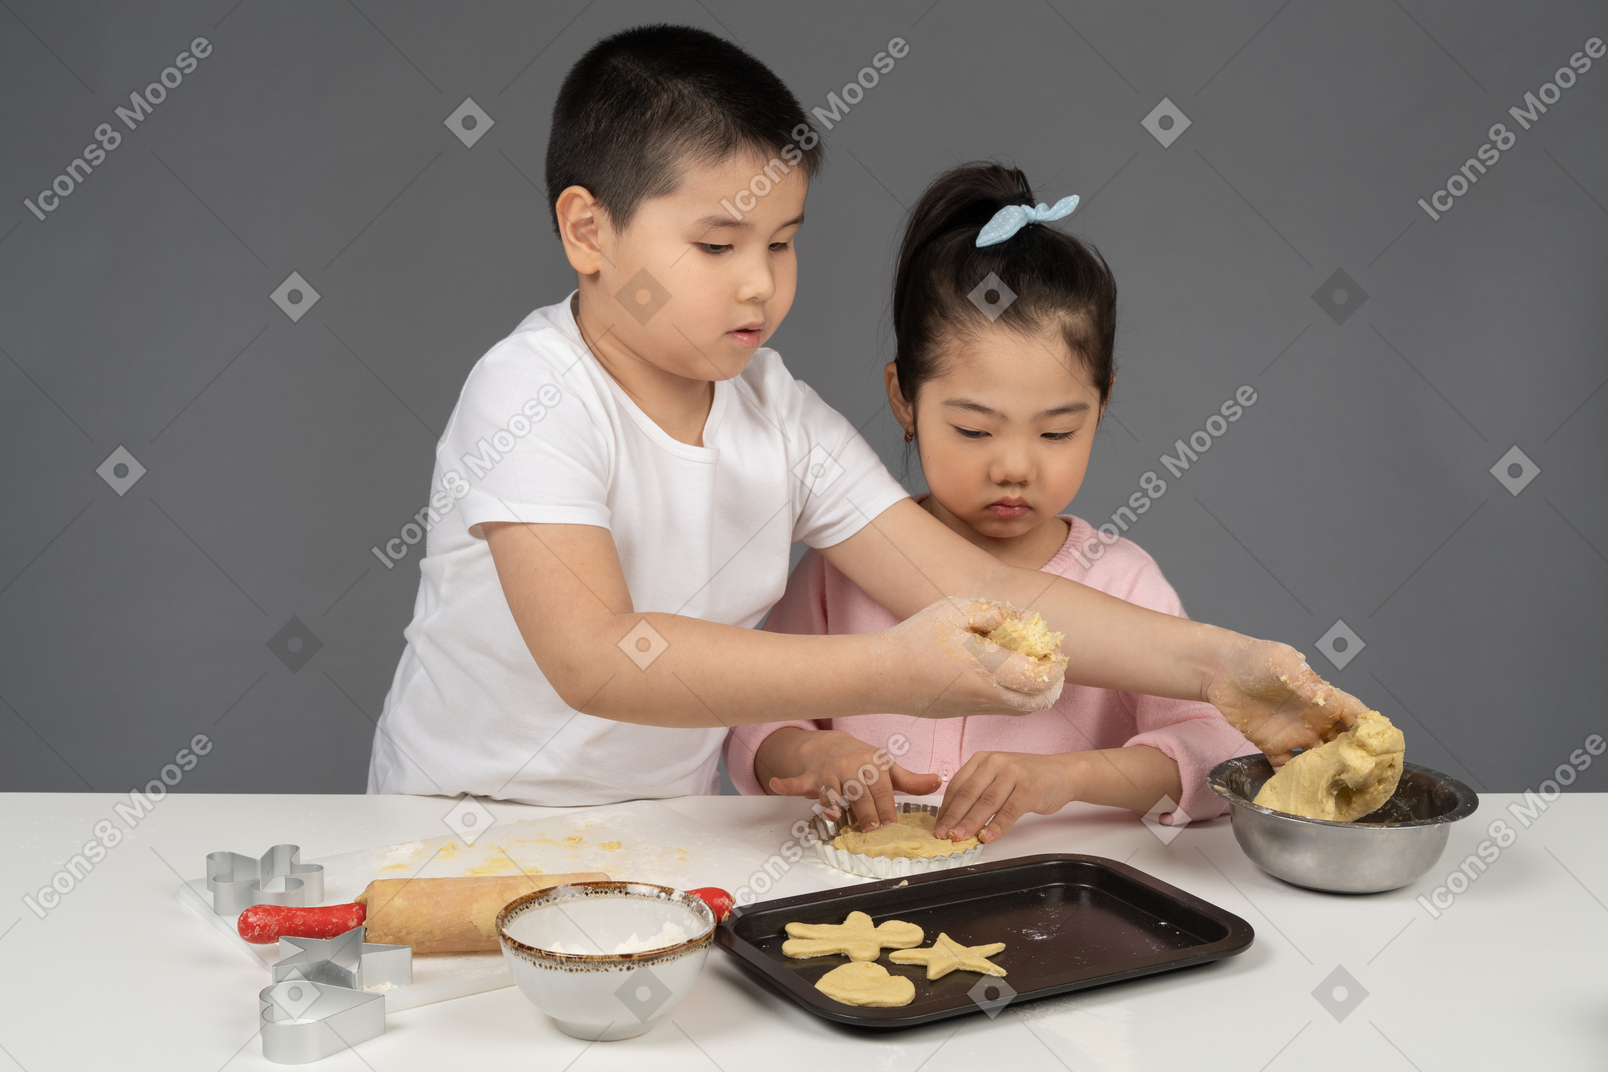 Boy teching his sister to bake cookies